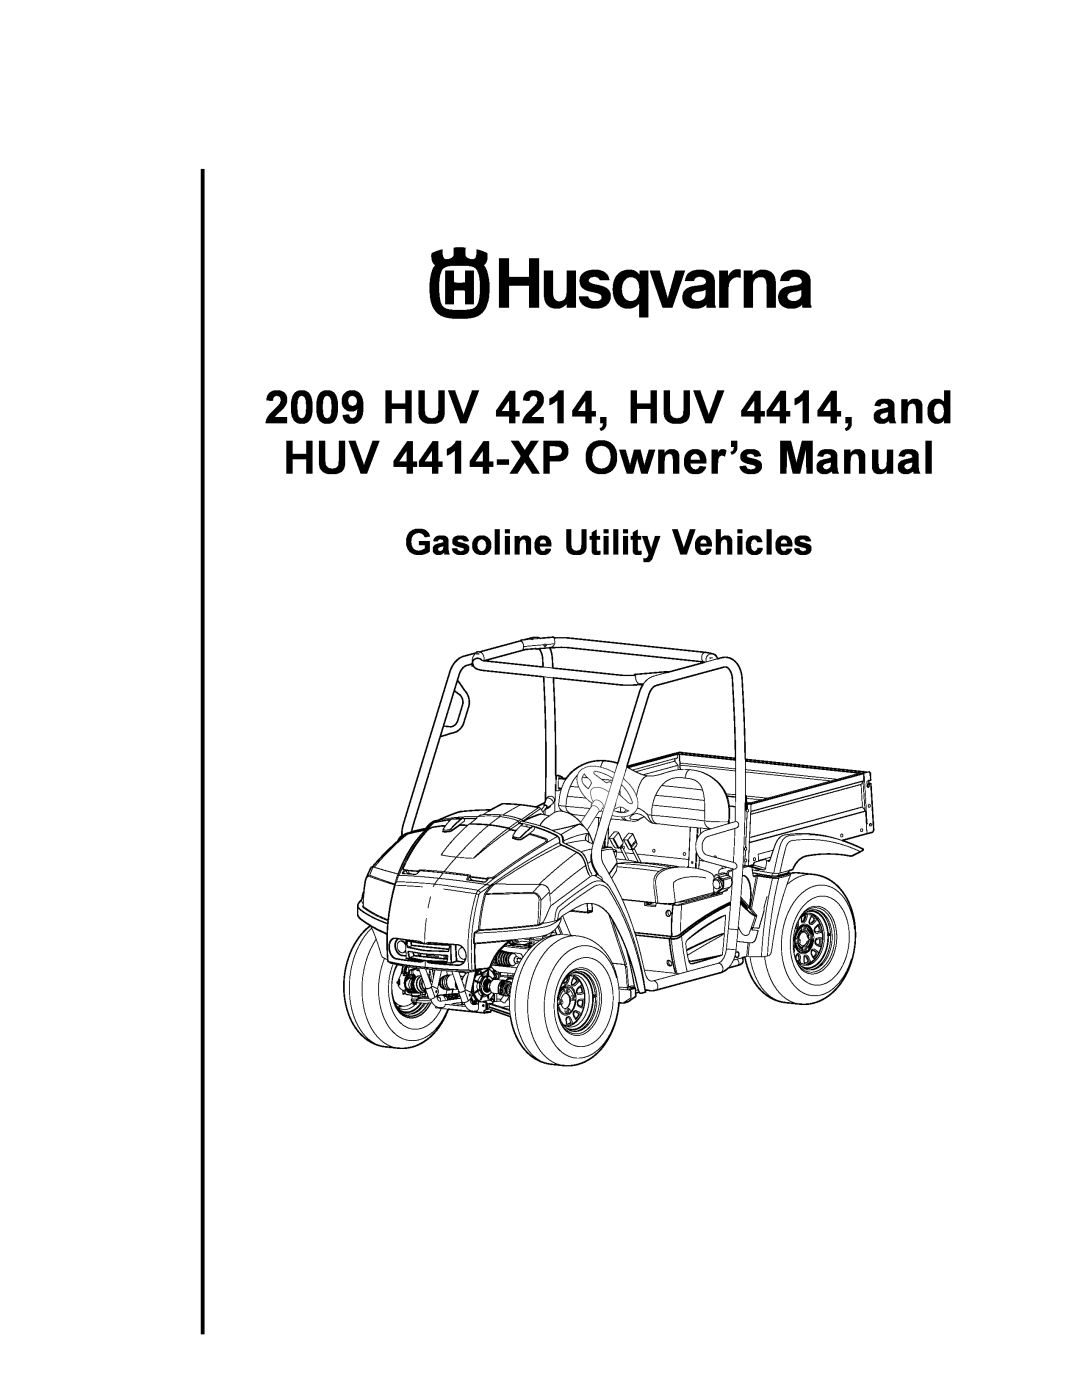 Husqvarna HUV 4214, HUV 4414-XP owner manual Gasoline Utility Vehicles 